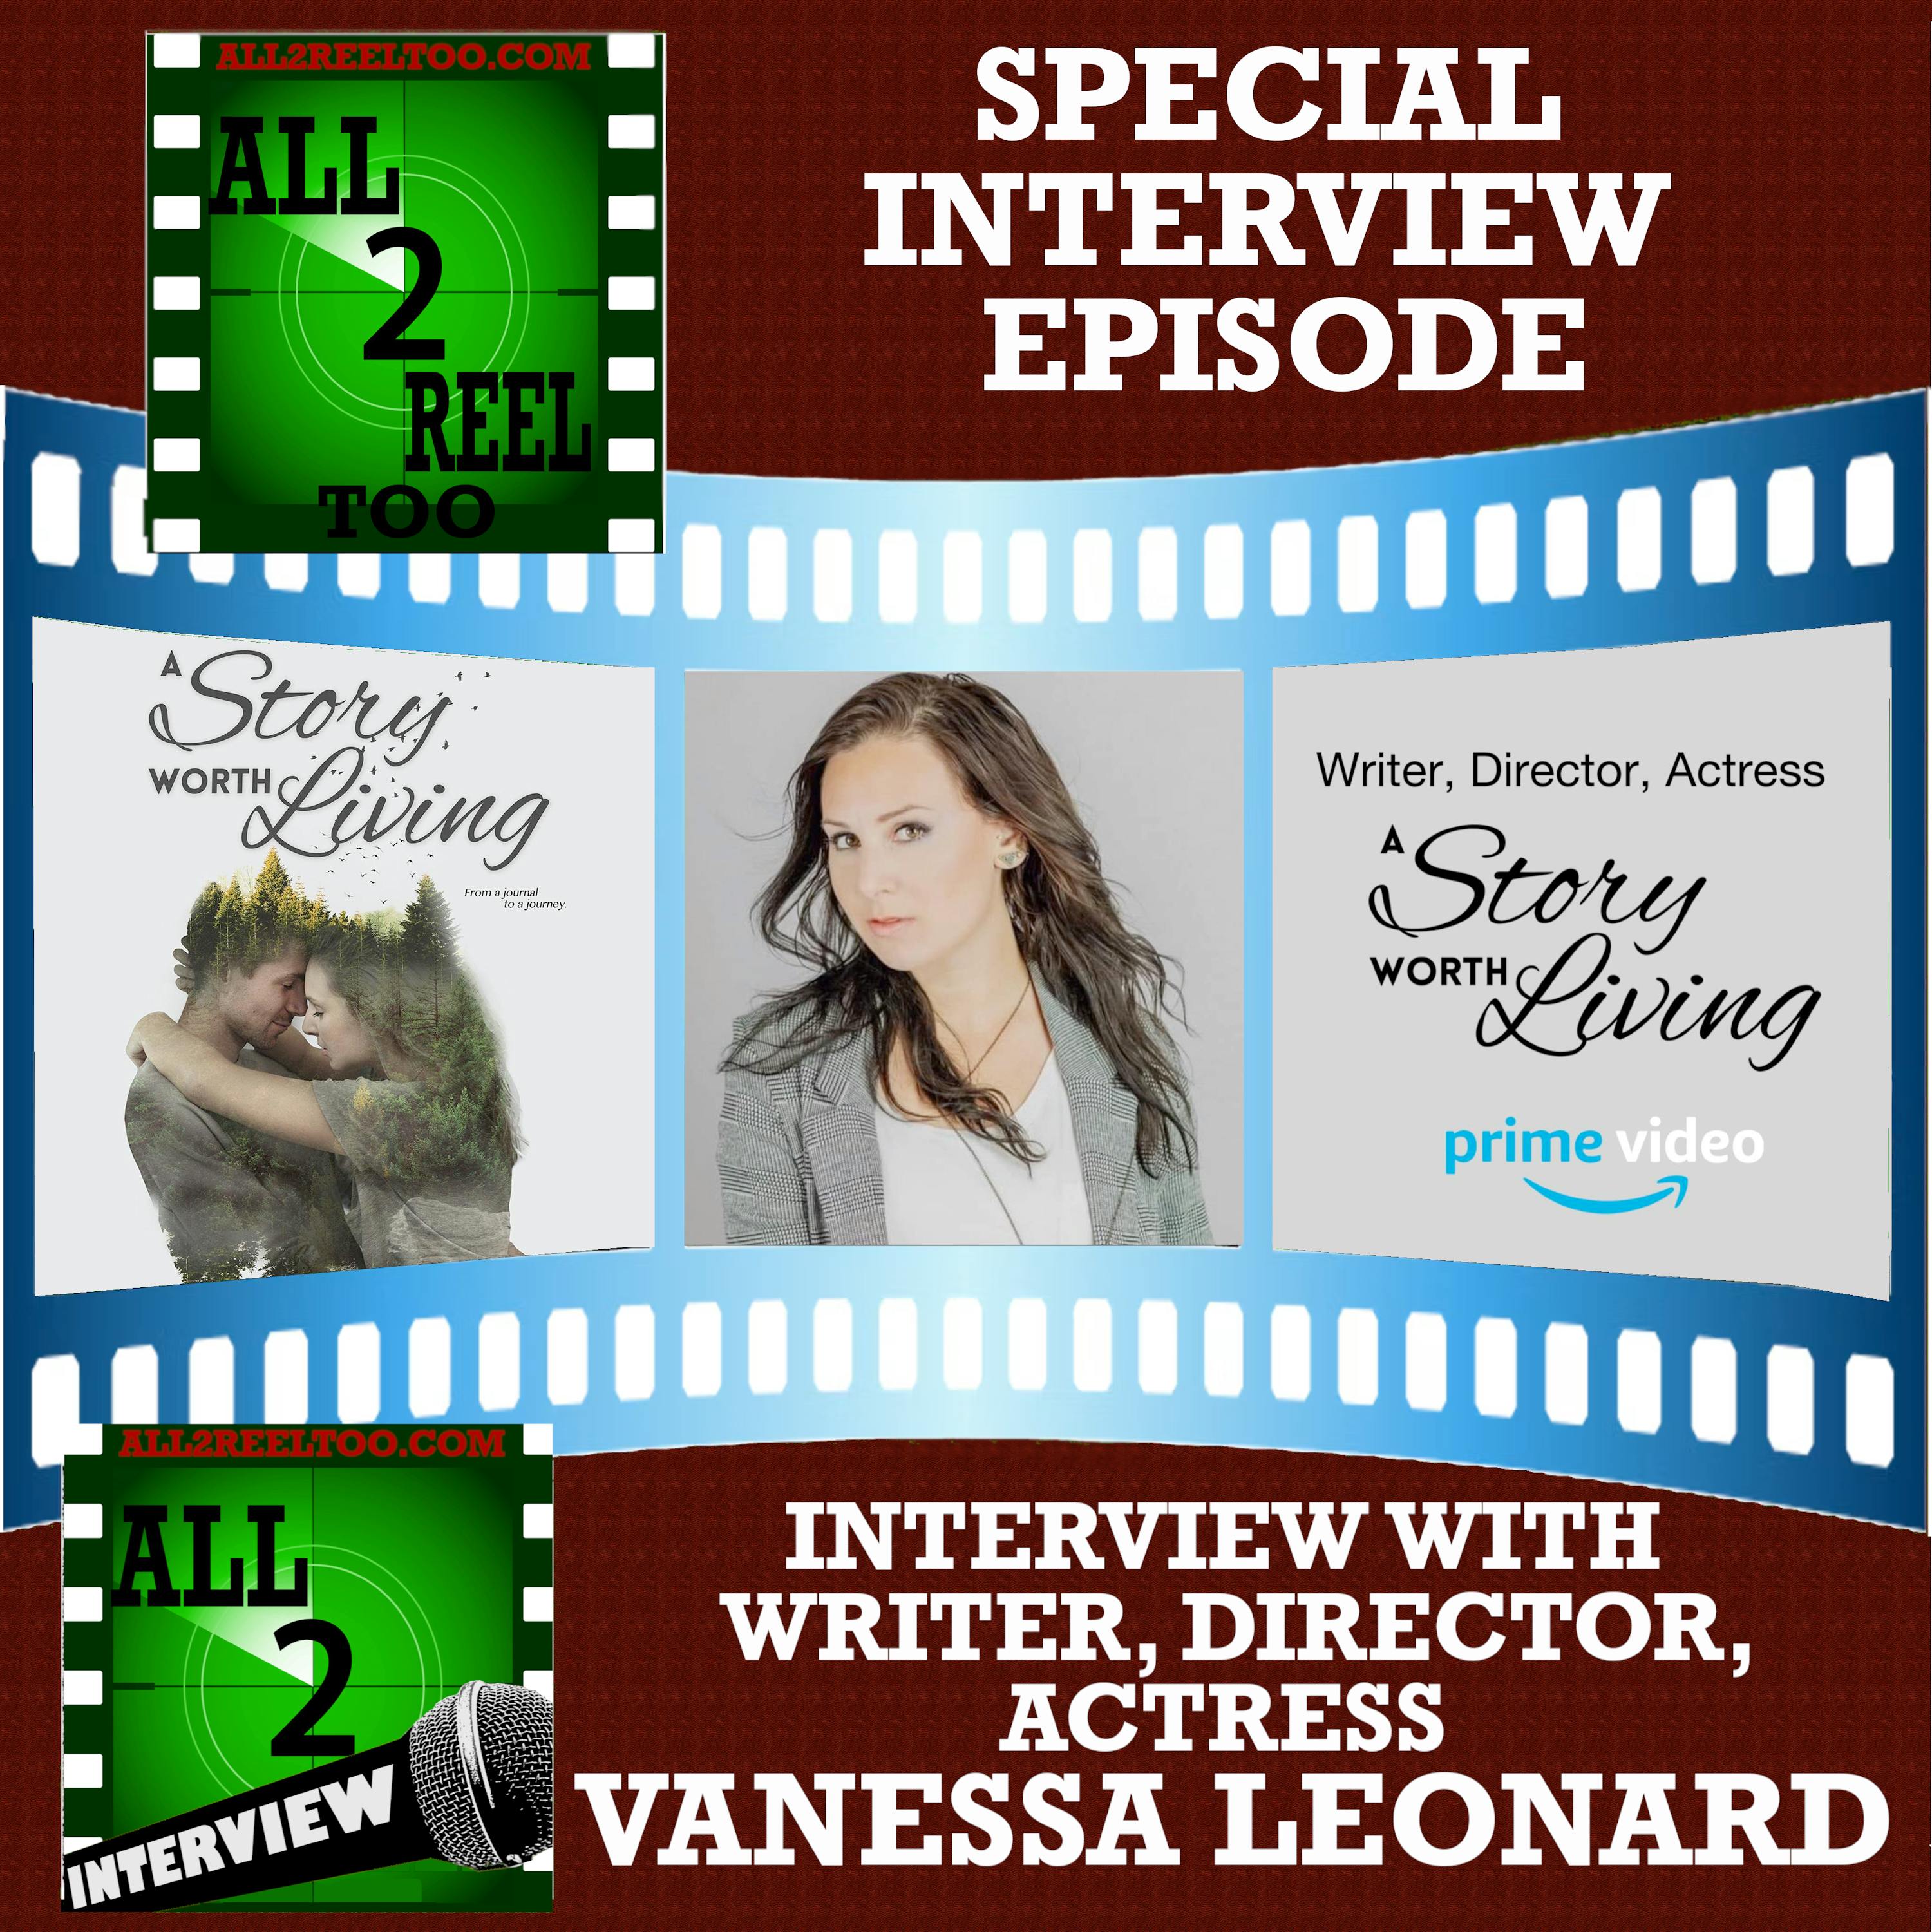 VANESSA LEONARD INTERVIEW